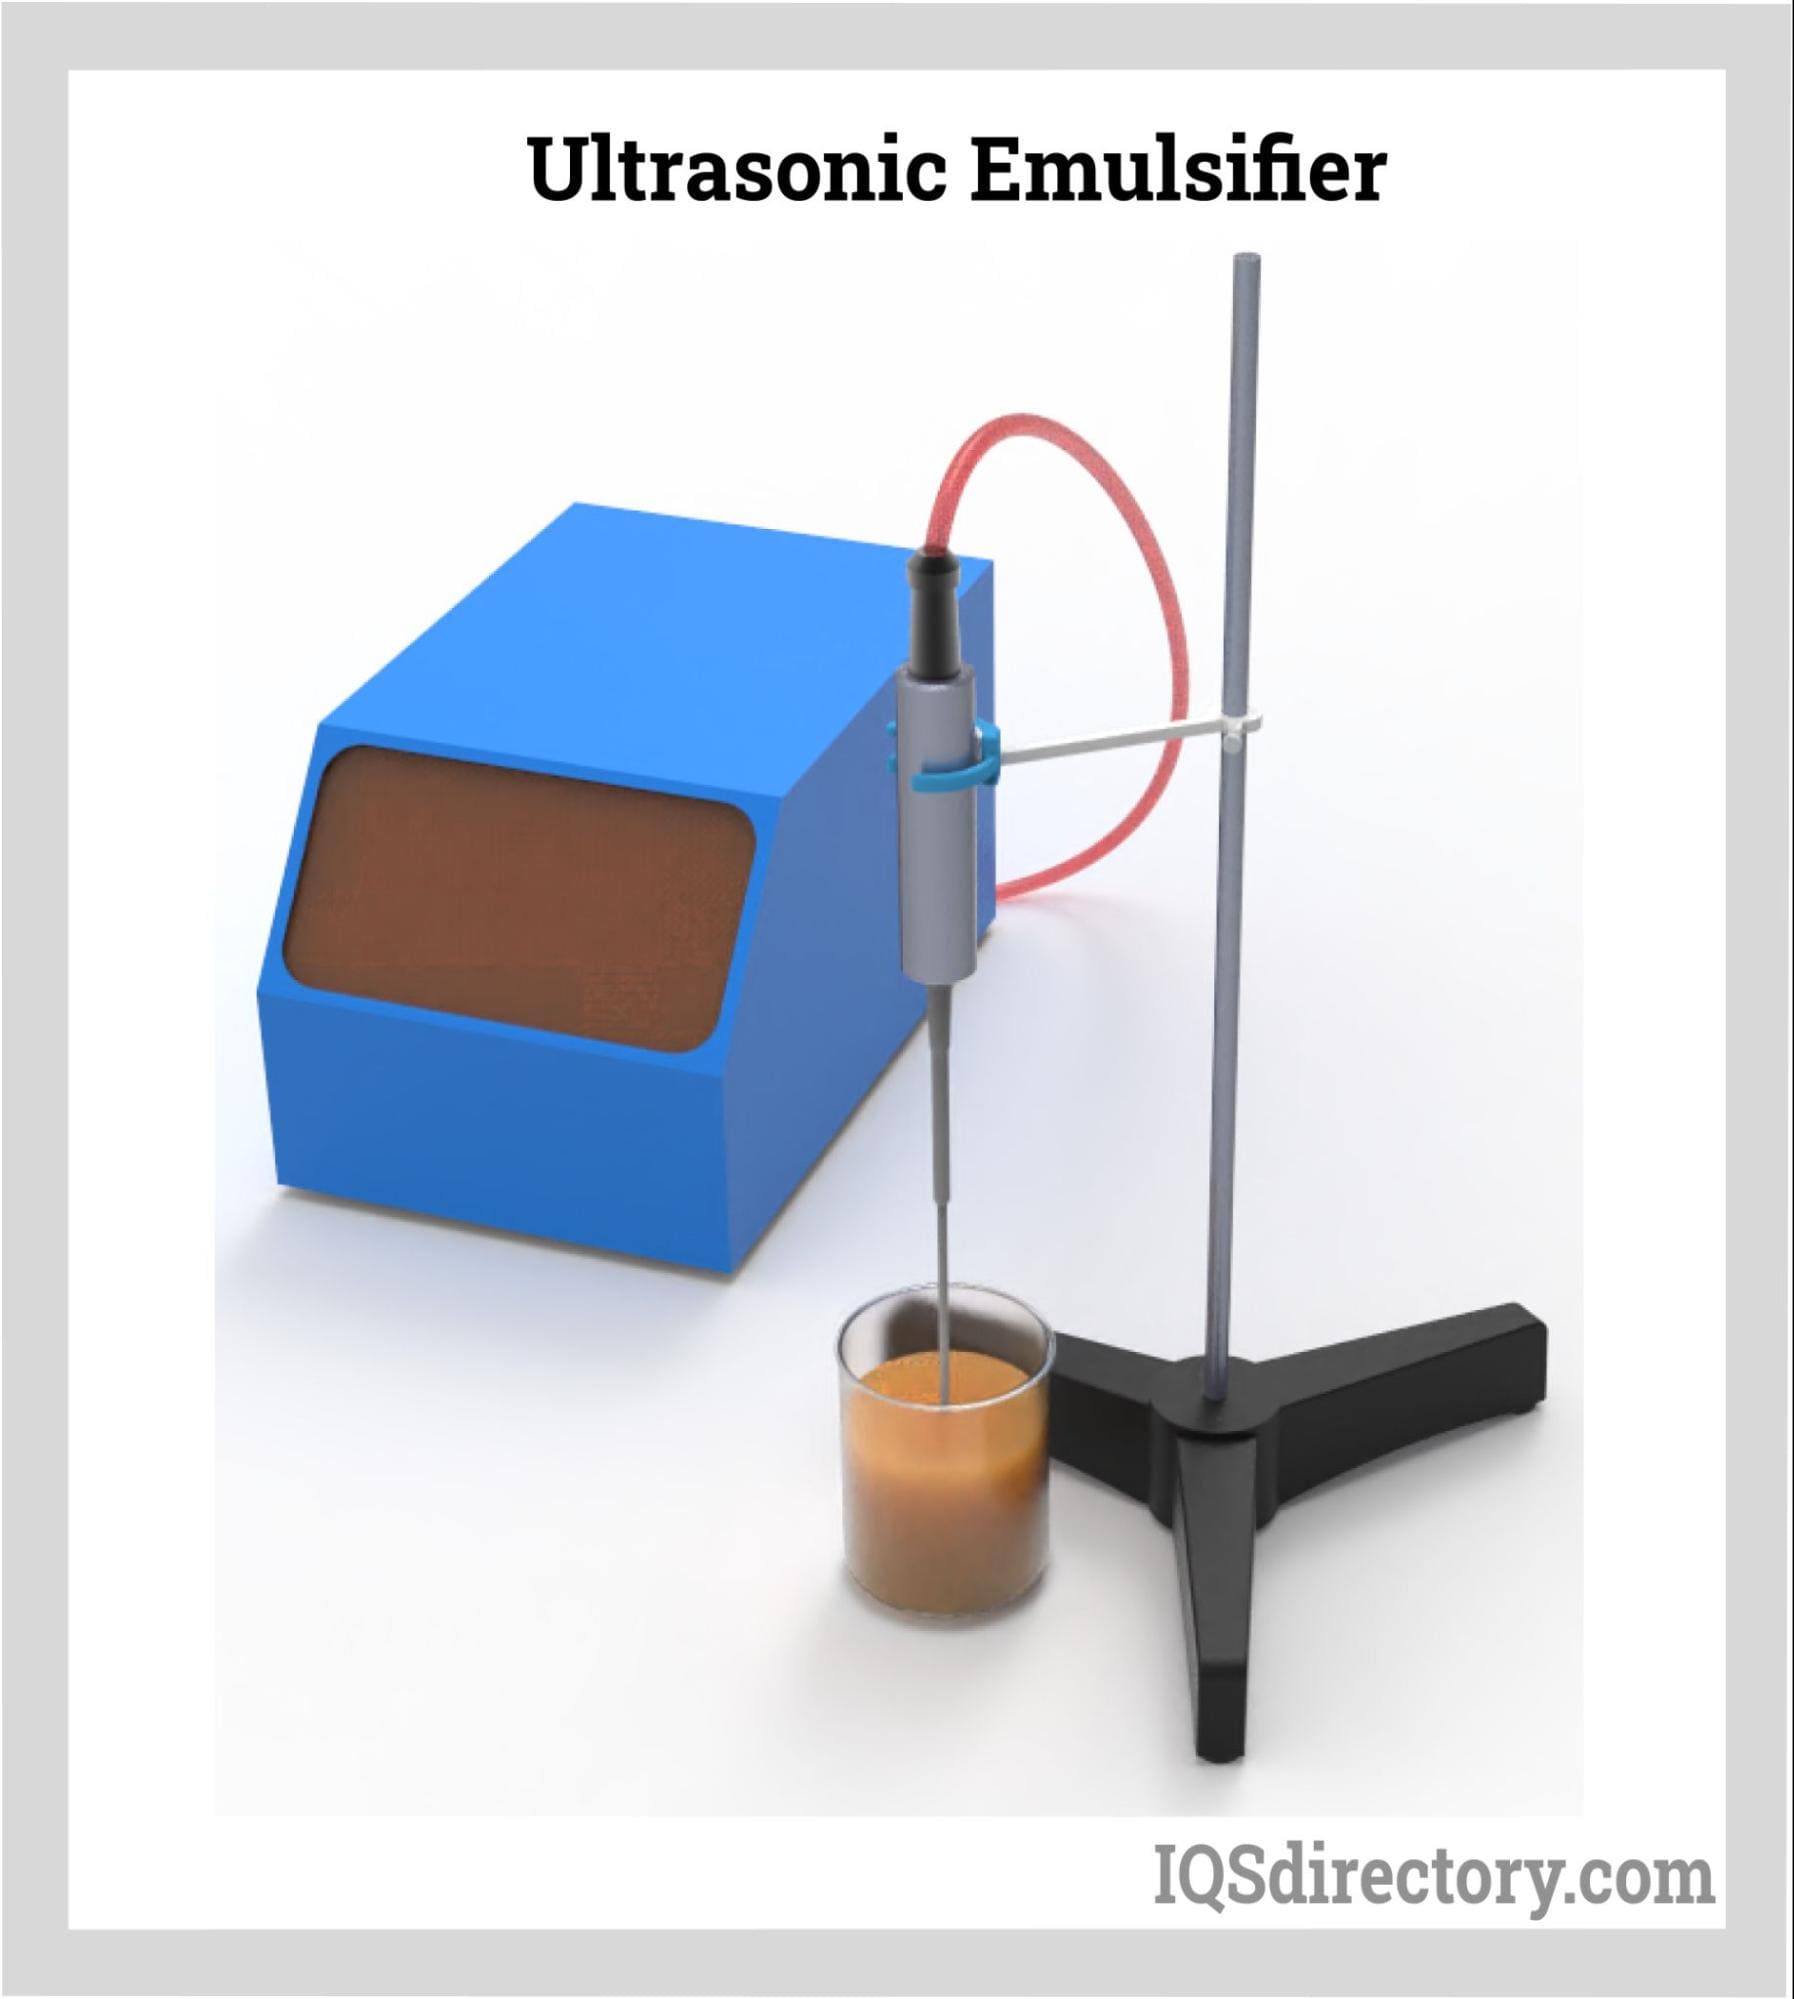 https://www.iqsdirectory.com/articles/mixer/emulsifiers/ultrasonic-emulsifier.jpg